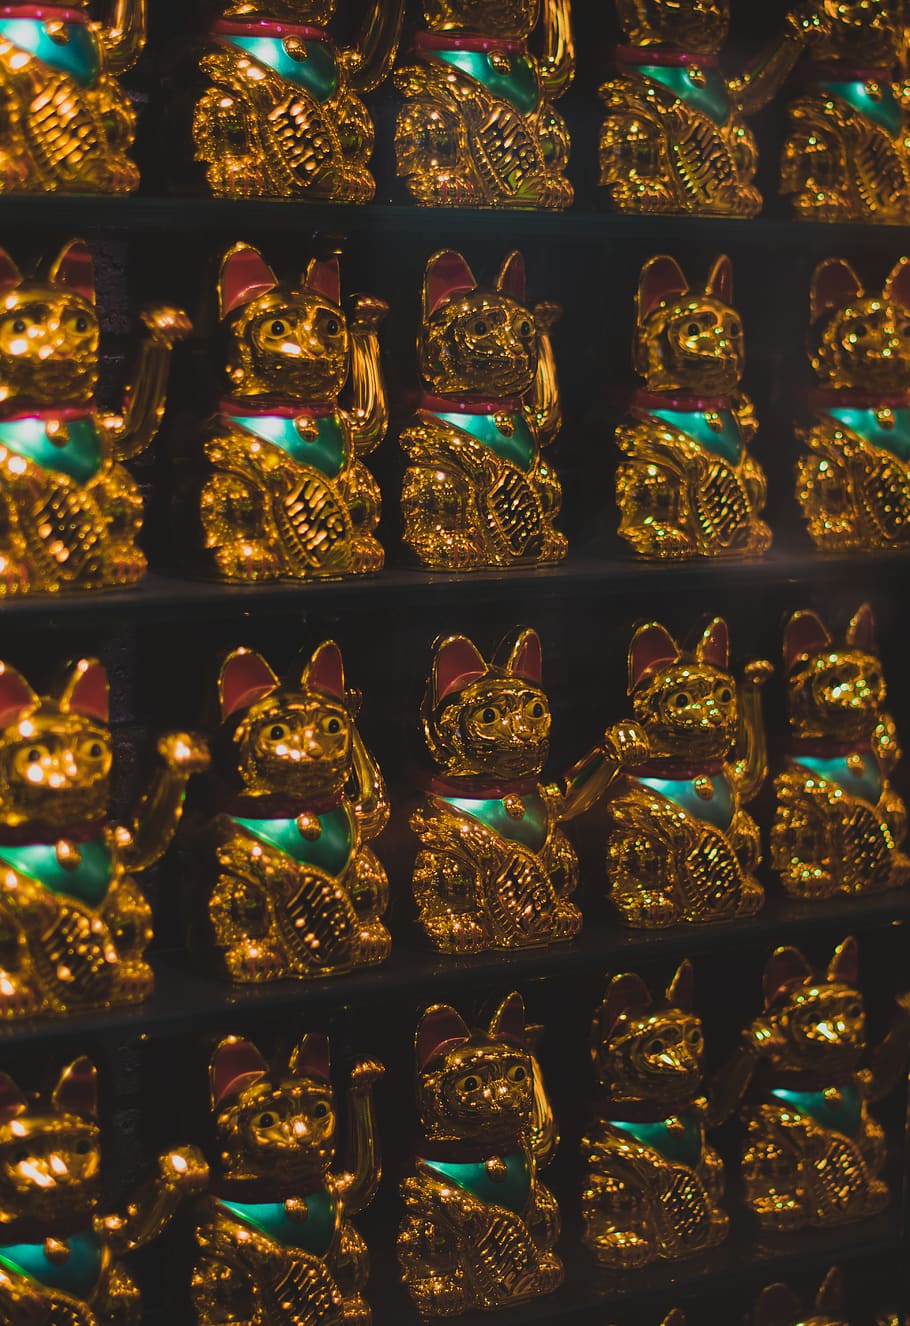 display of gold lucky cat figurines, australia, sydney, model